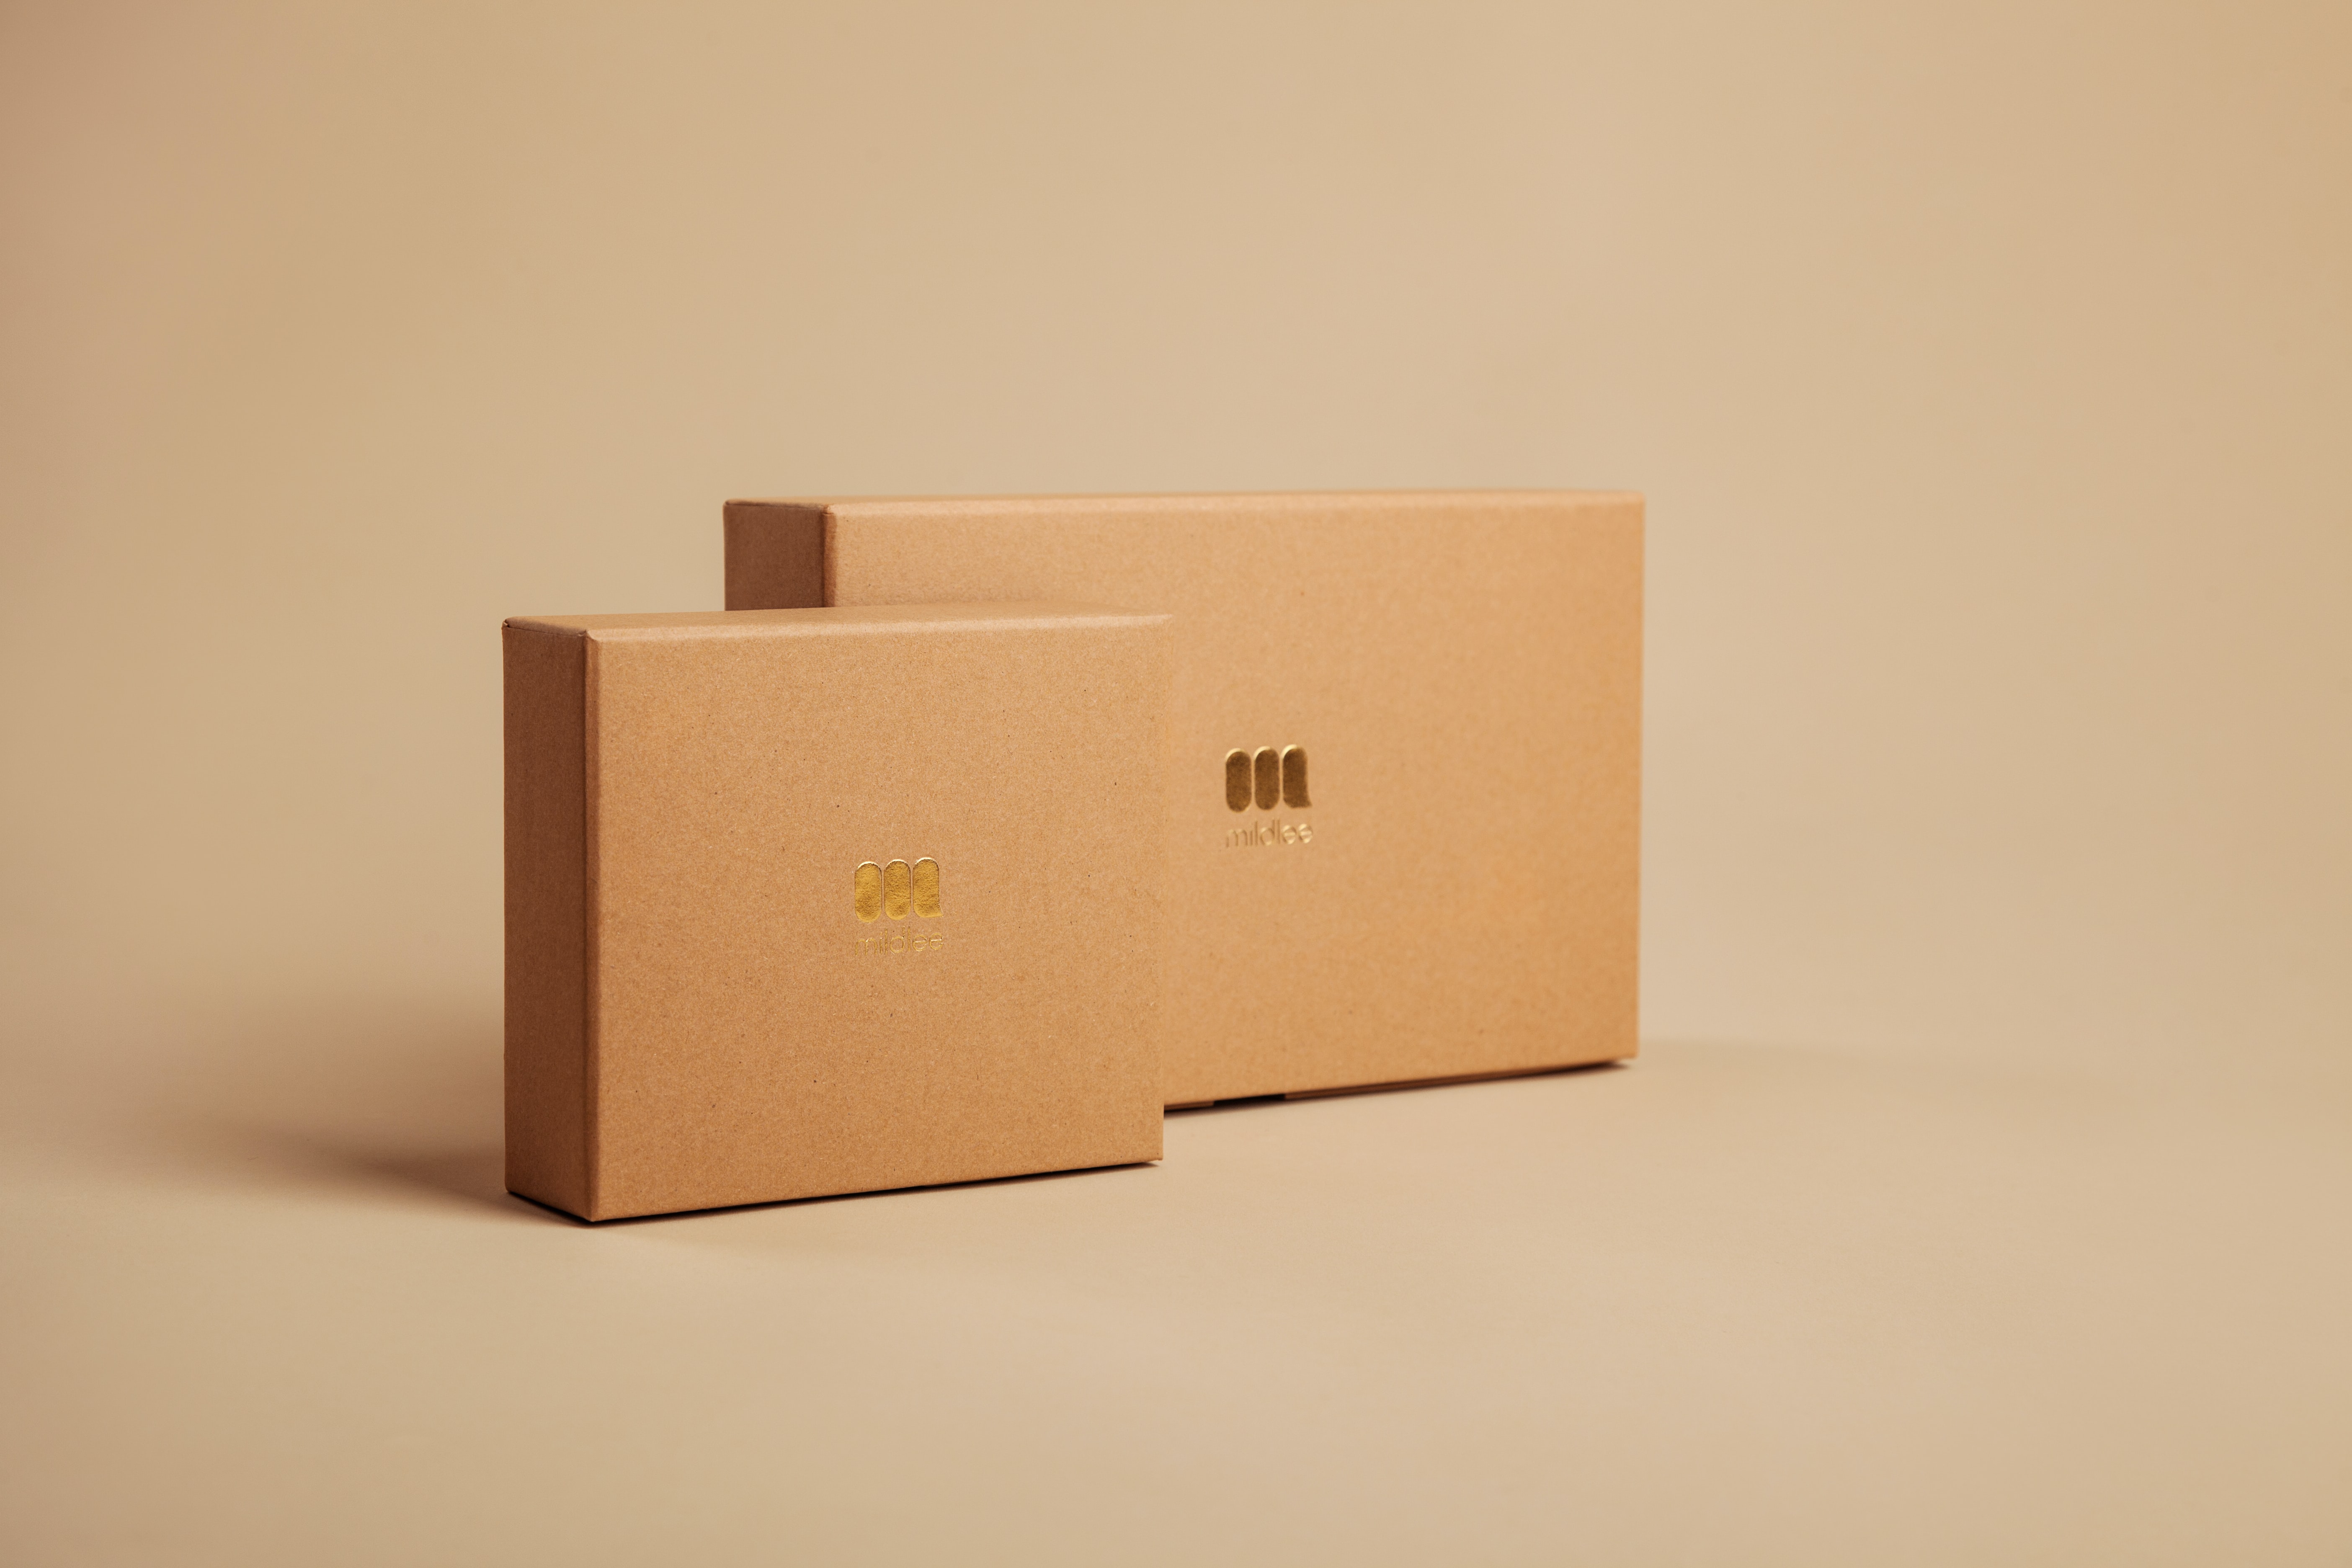 Example of types of packaging solutions: brown elegant cardboard boxes.